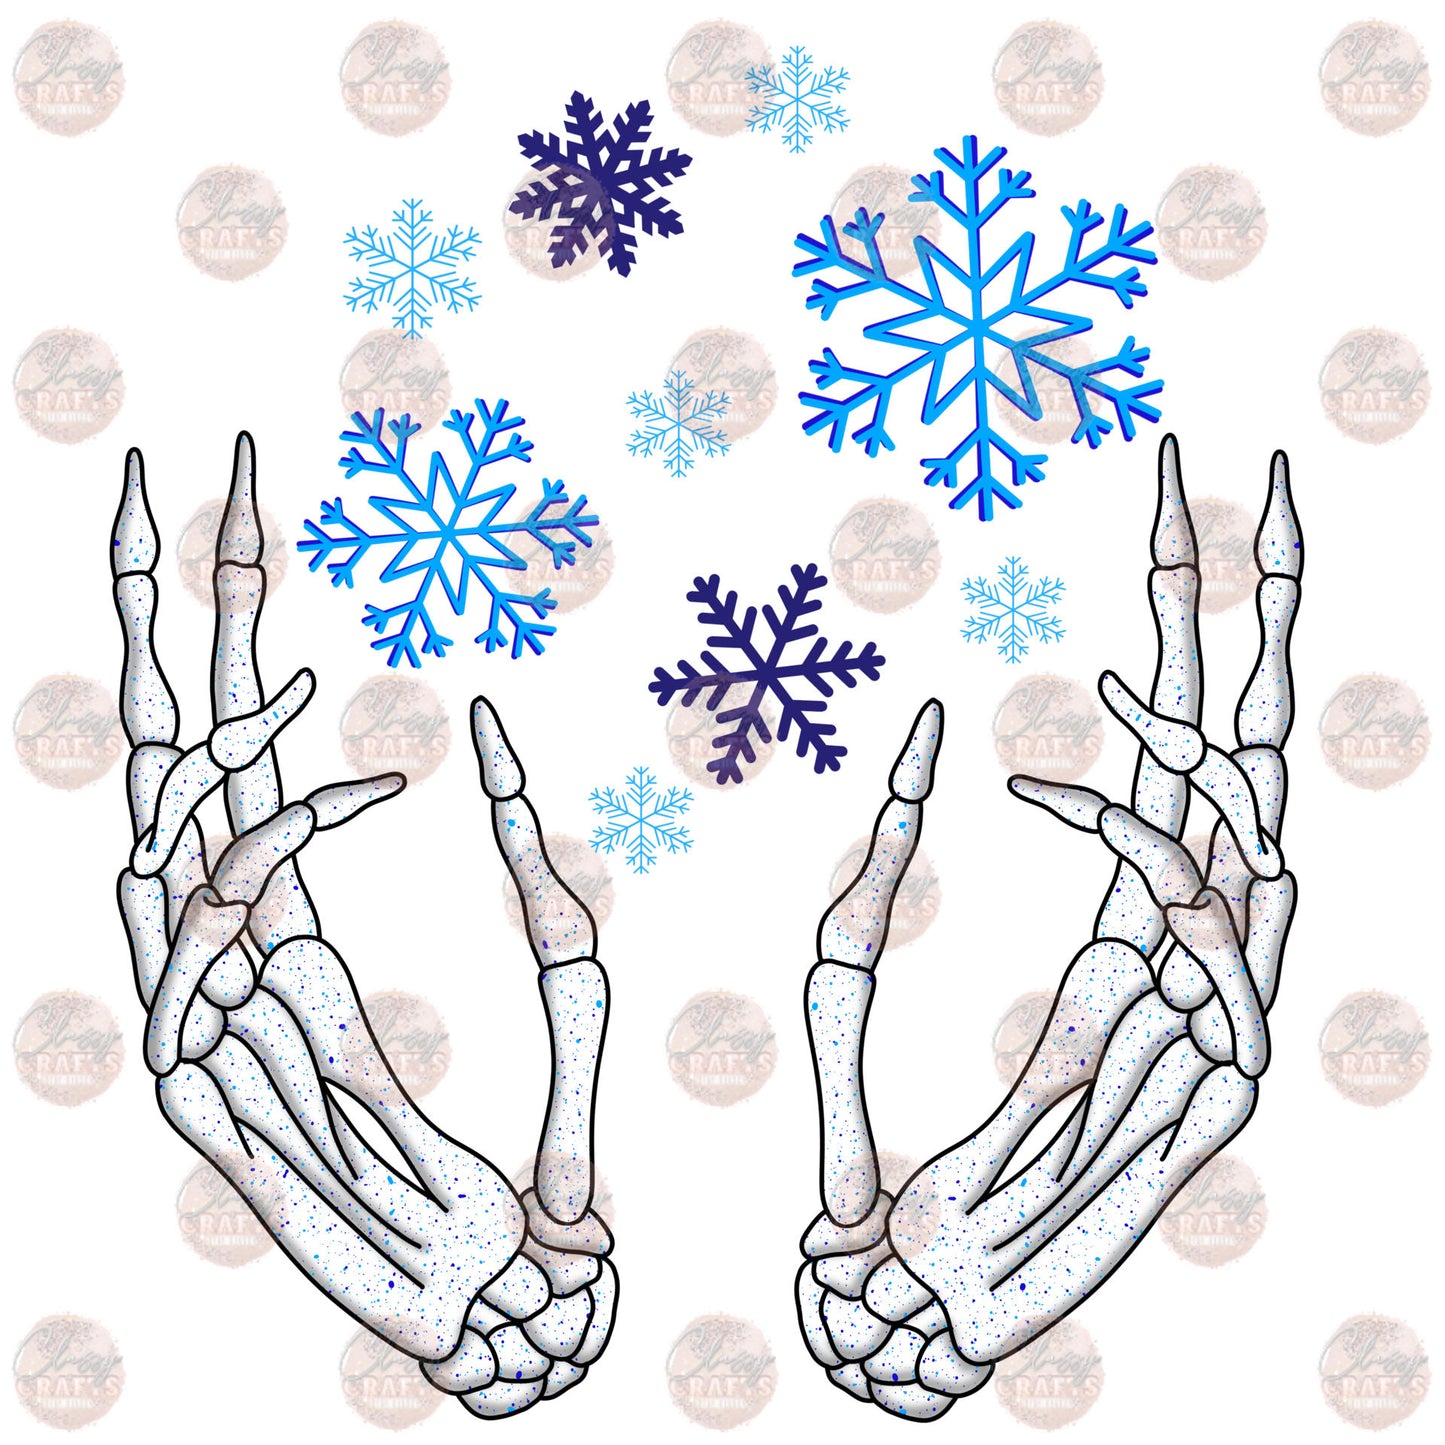 Skellie Hand Winter - Sublimation Transfer